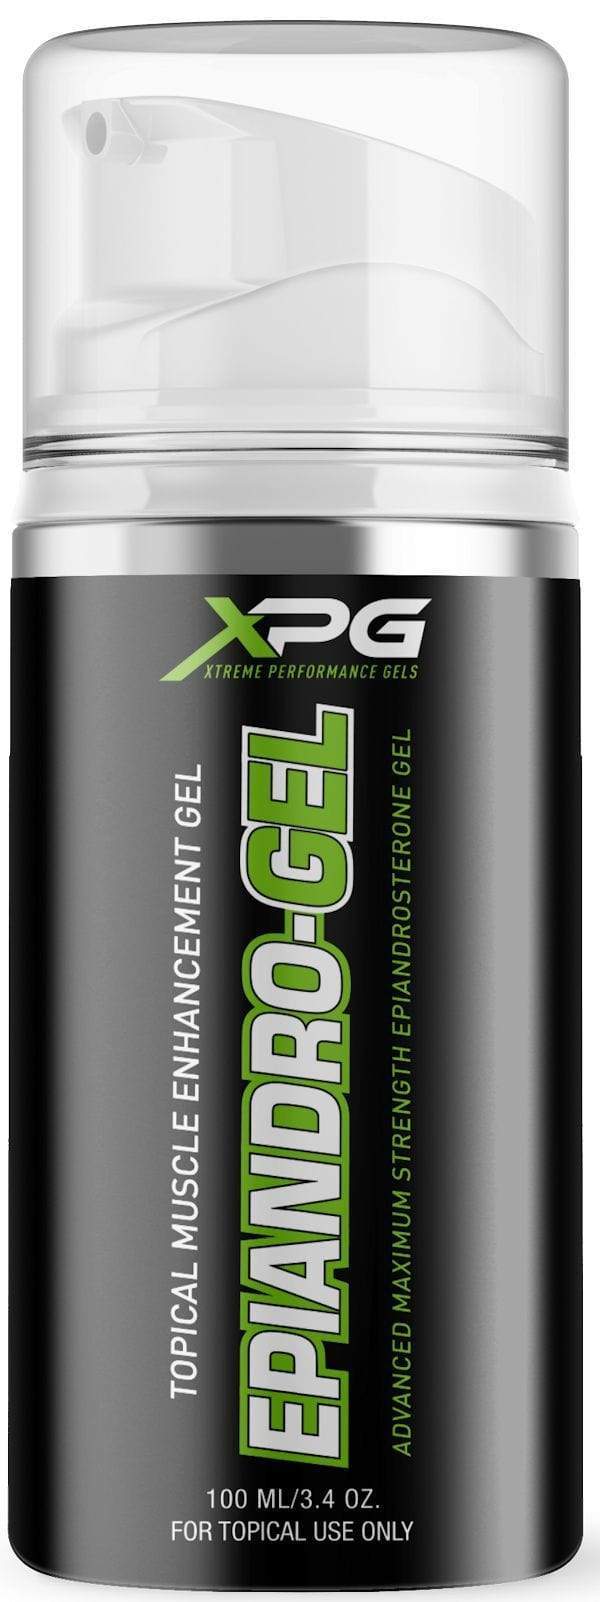 Xtreme Performance Gels XPG EpiAndro-Gels Muscle Enhancement 3.4 oz|Lowcostvitamin.com